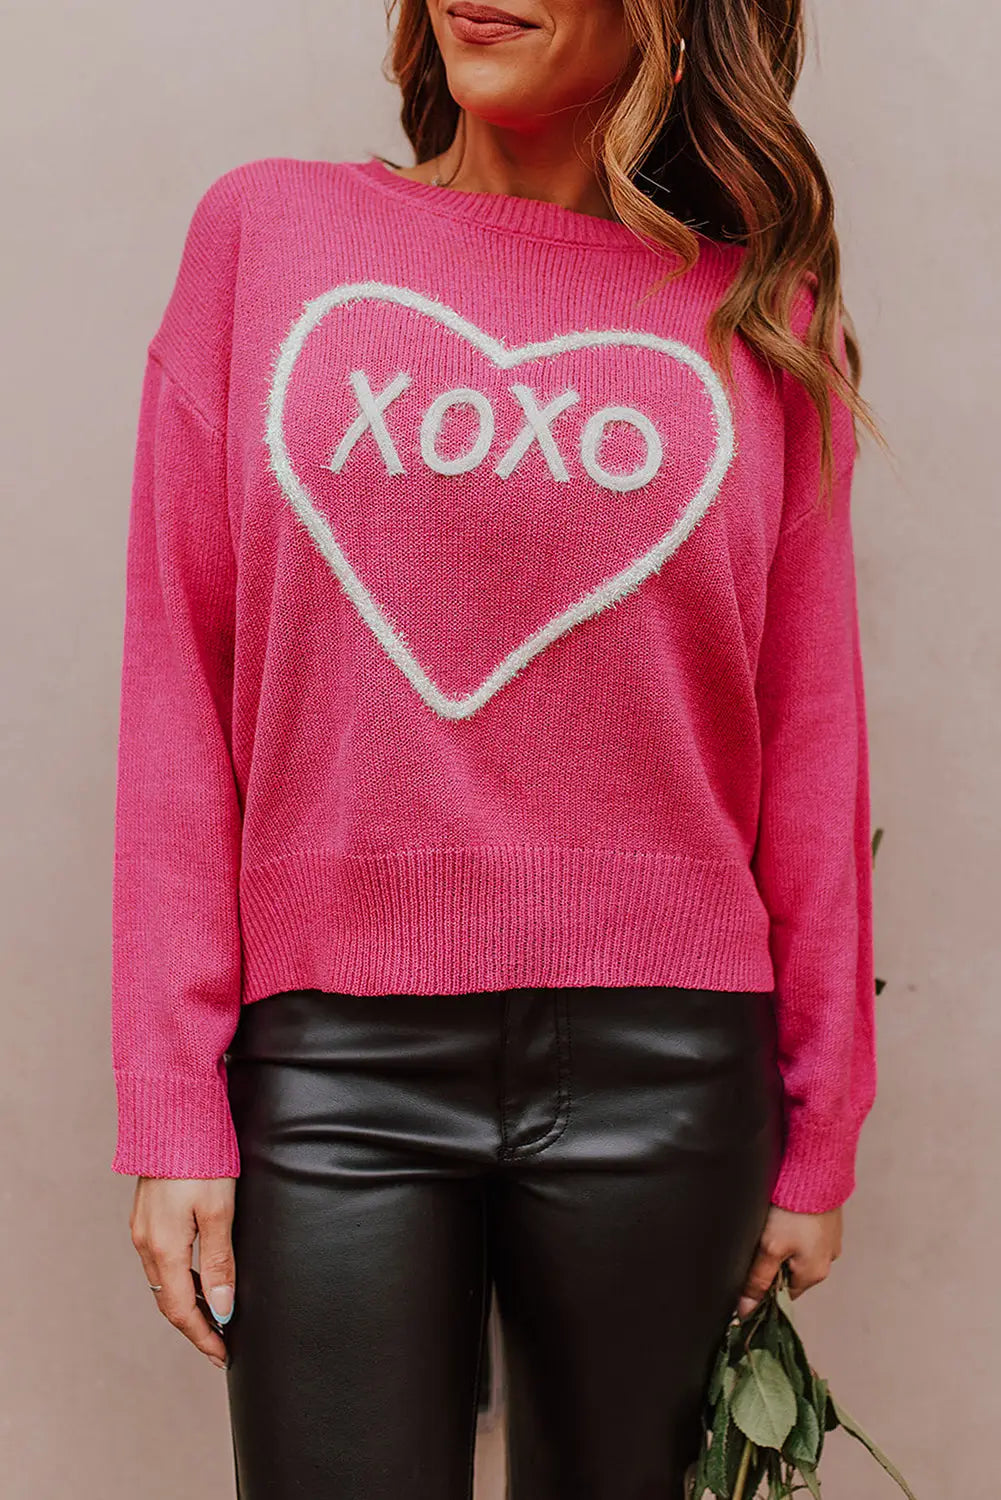 Rose heart xoxo pattern drop shoulder rib knit sweater - l 55% acrylic + 45% cotton sweaters & cardigans